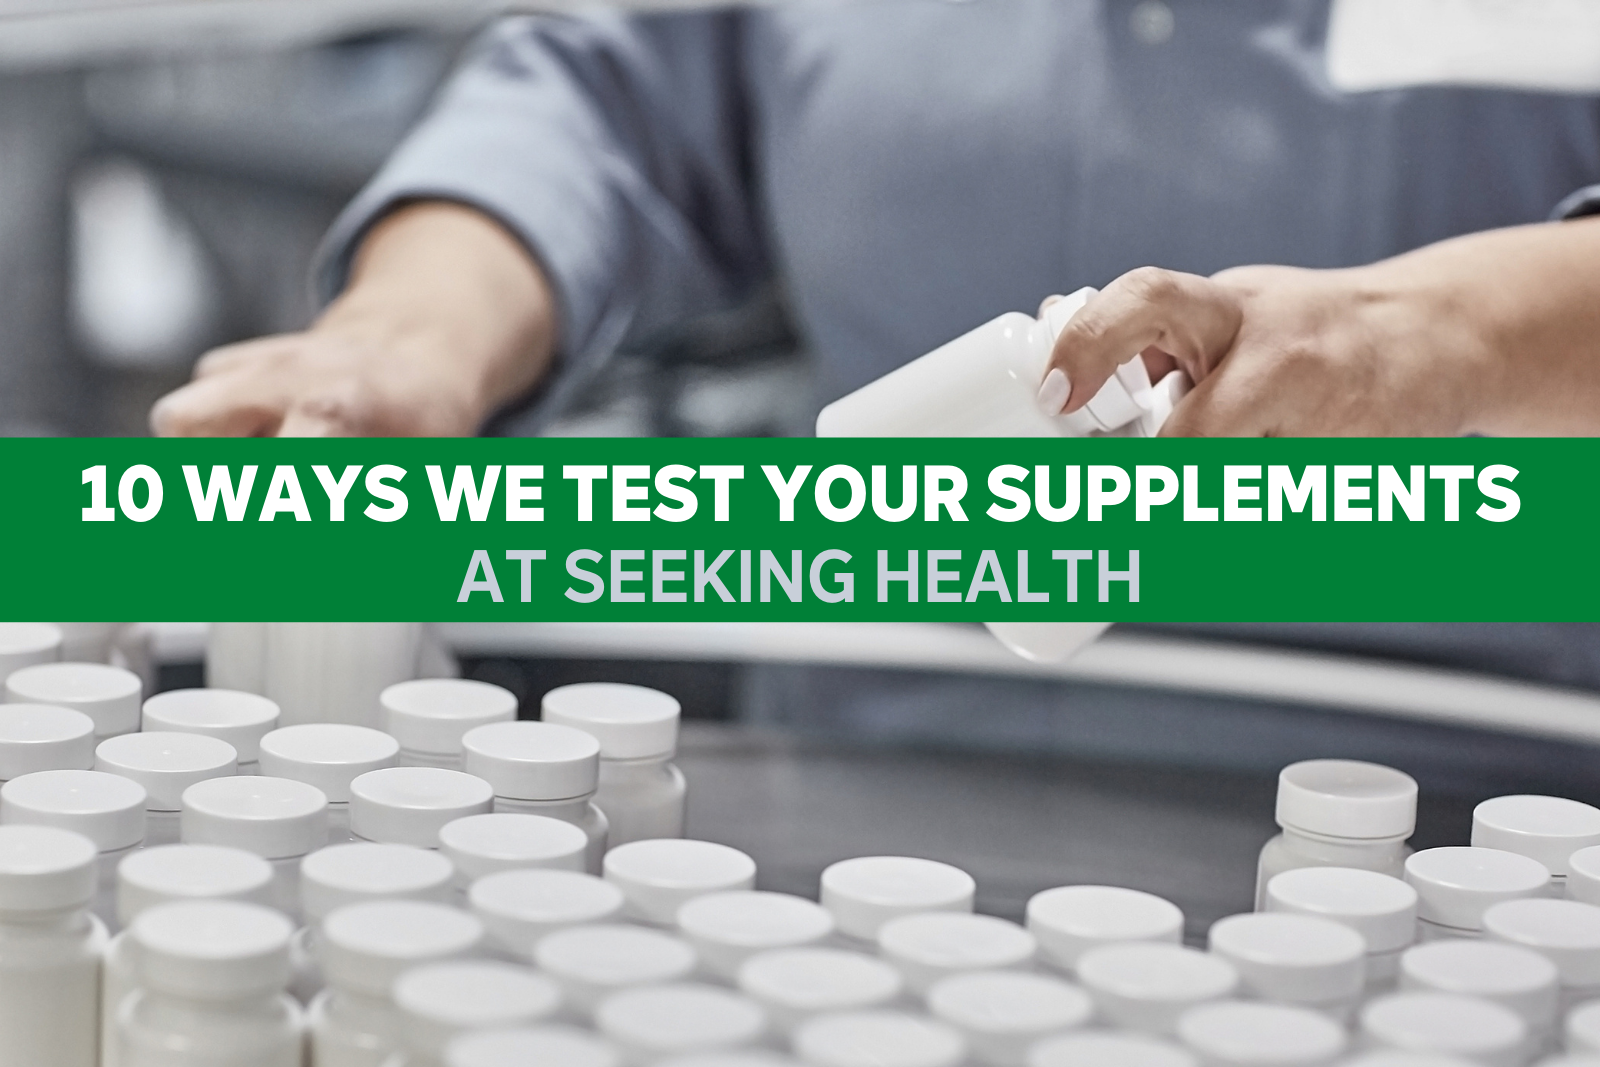 10 Ways We Test Your Supplements at Seeking Health